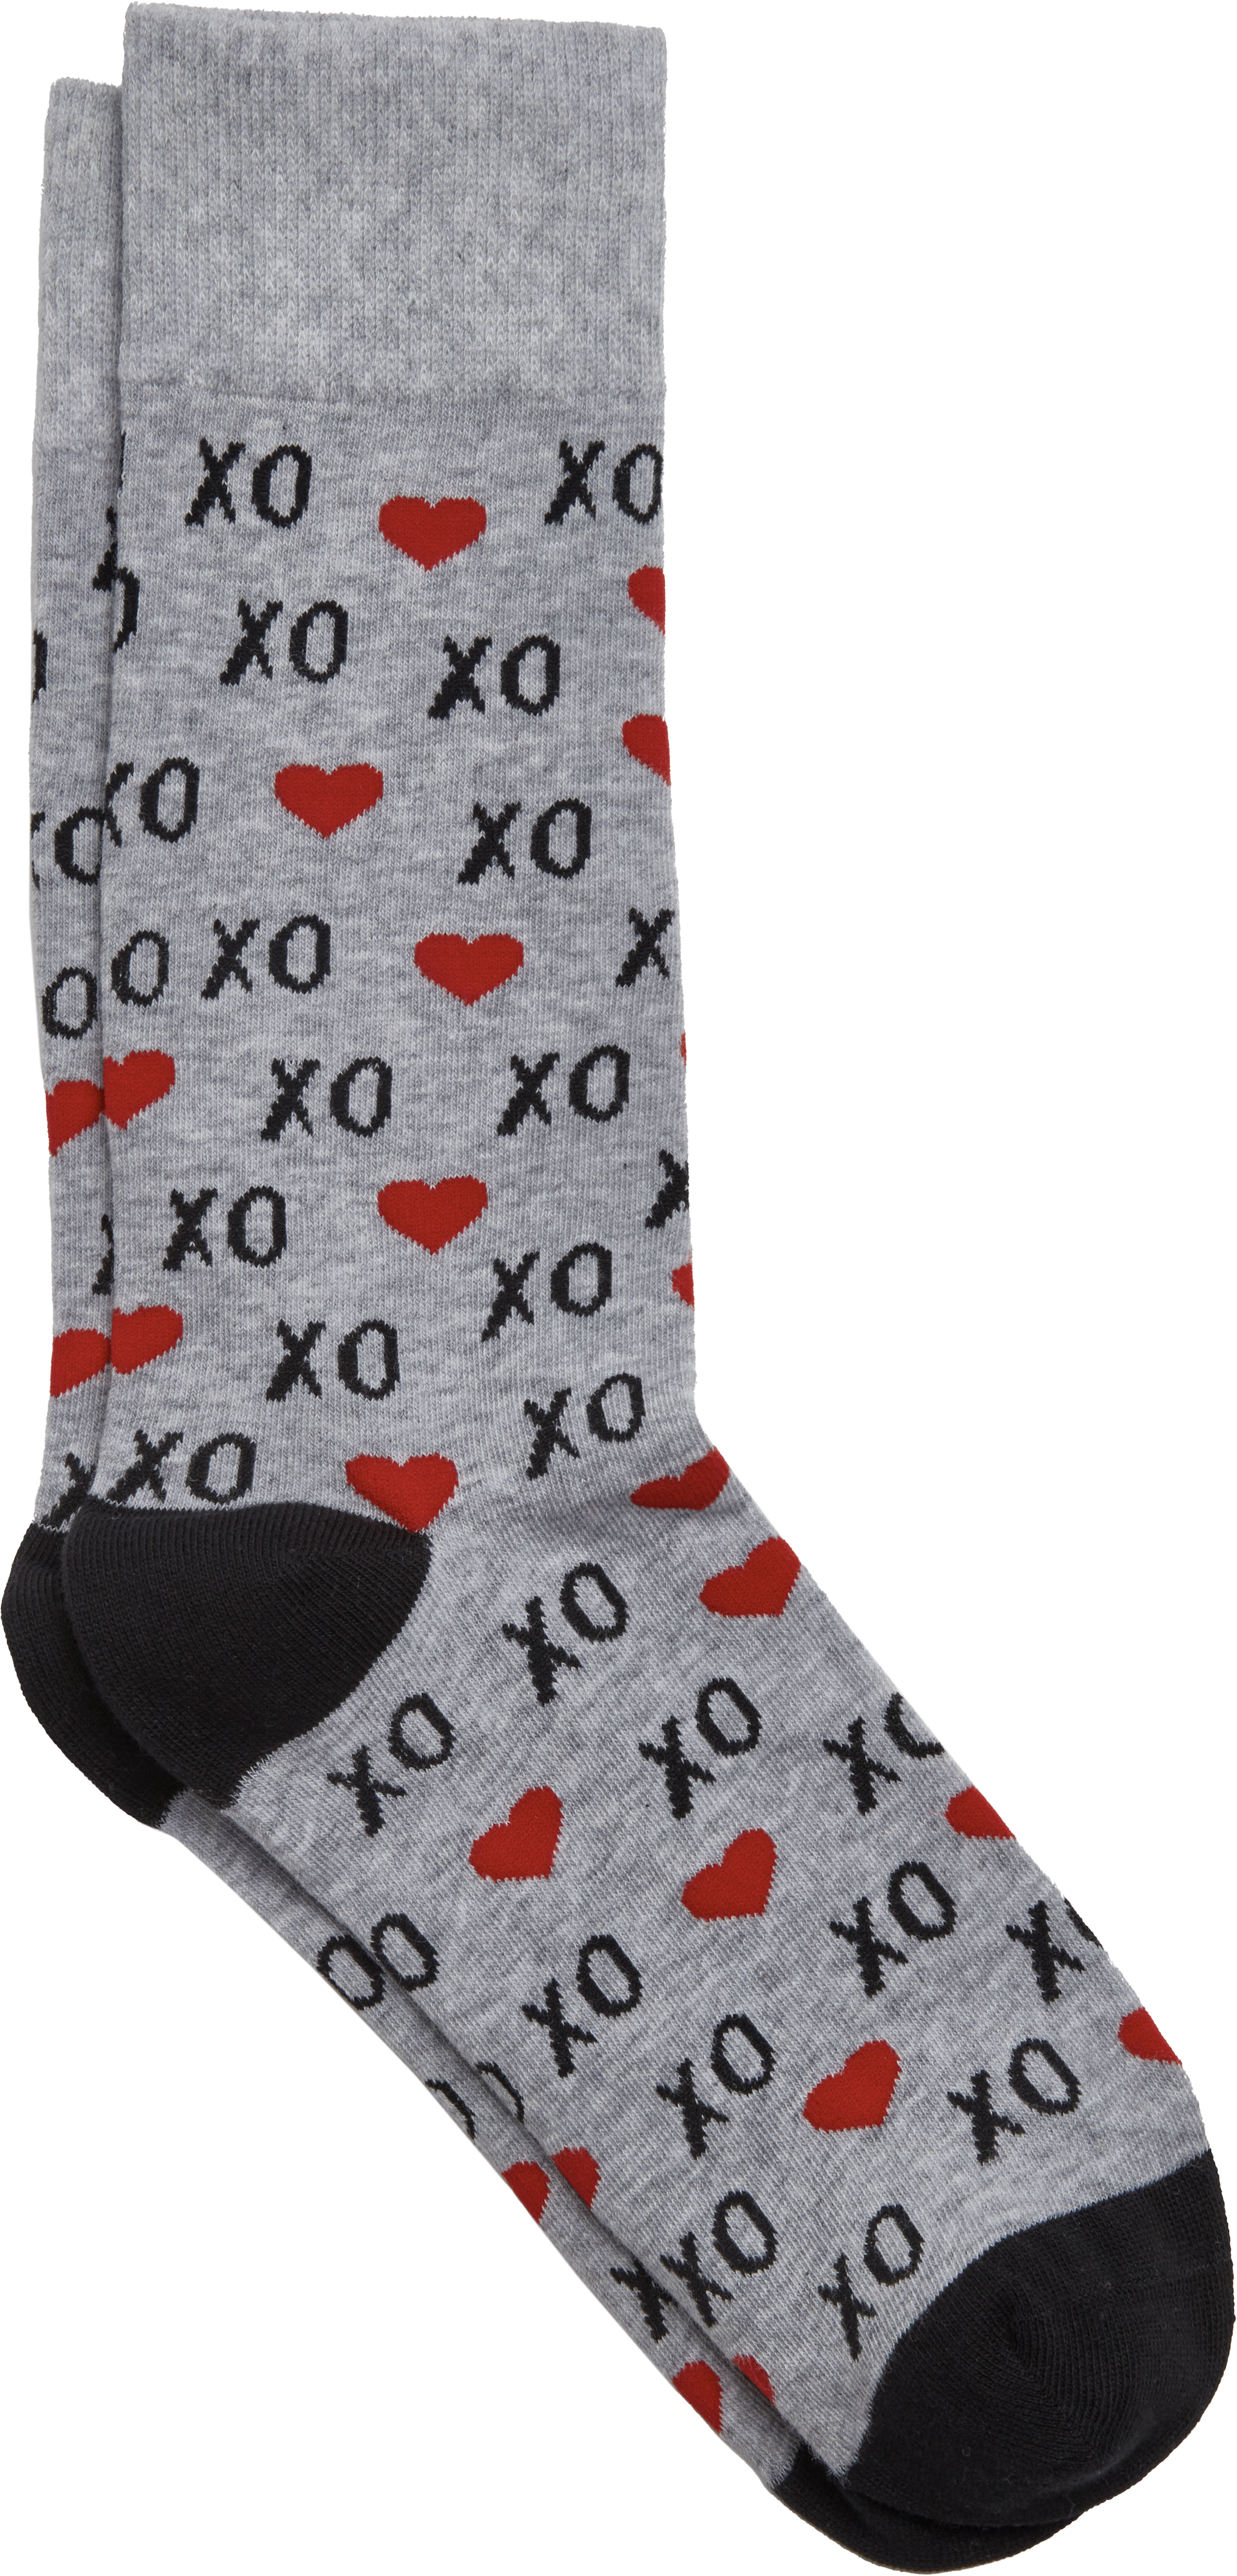 1-Pair Valentine's Day Socks